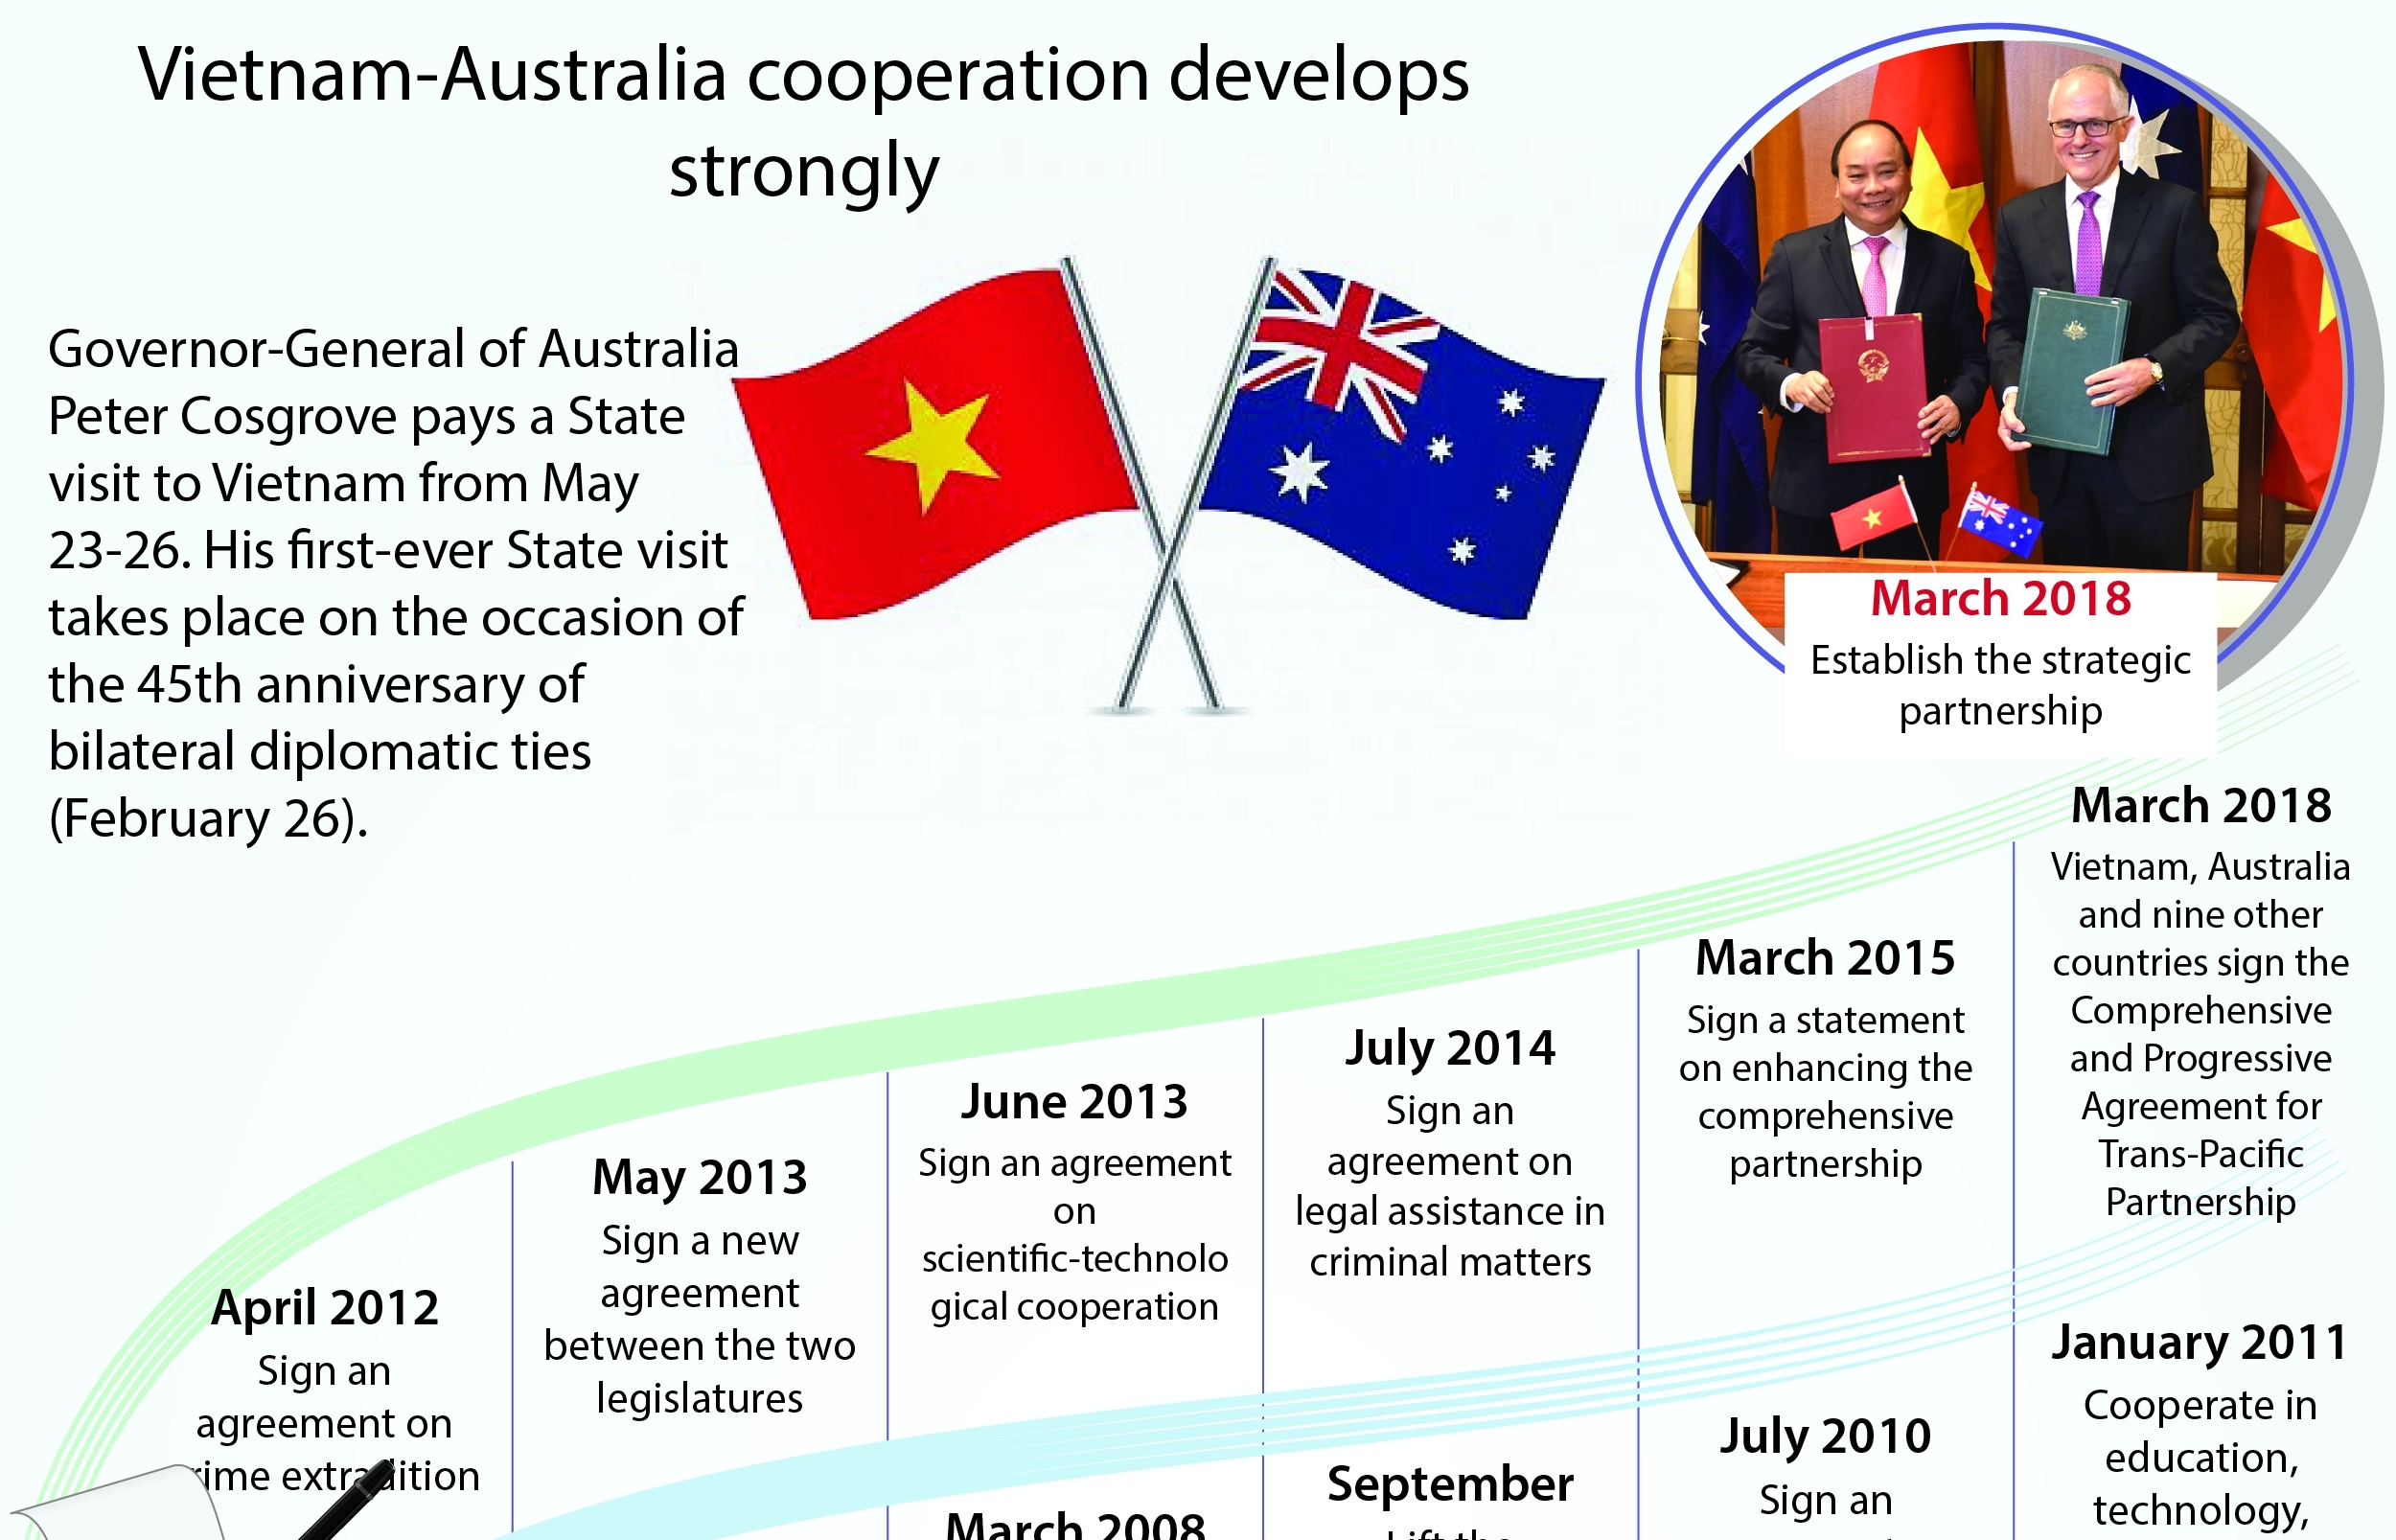 Vietnam-Australia cooperation develops strongly